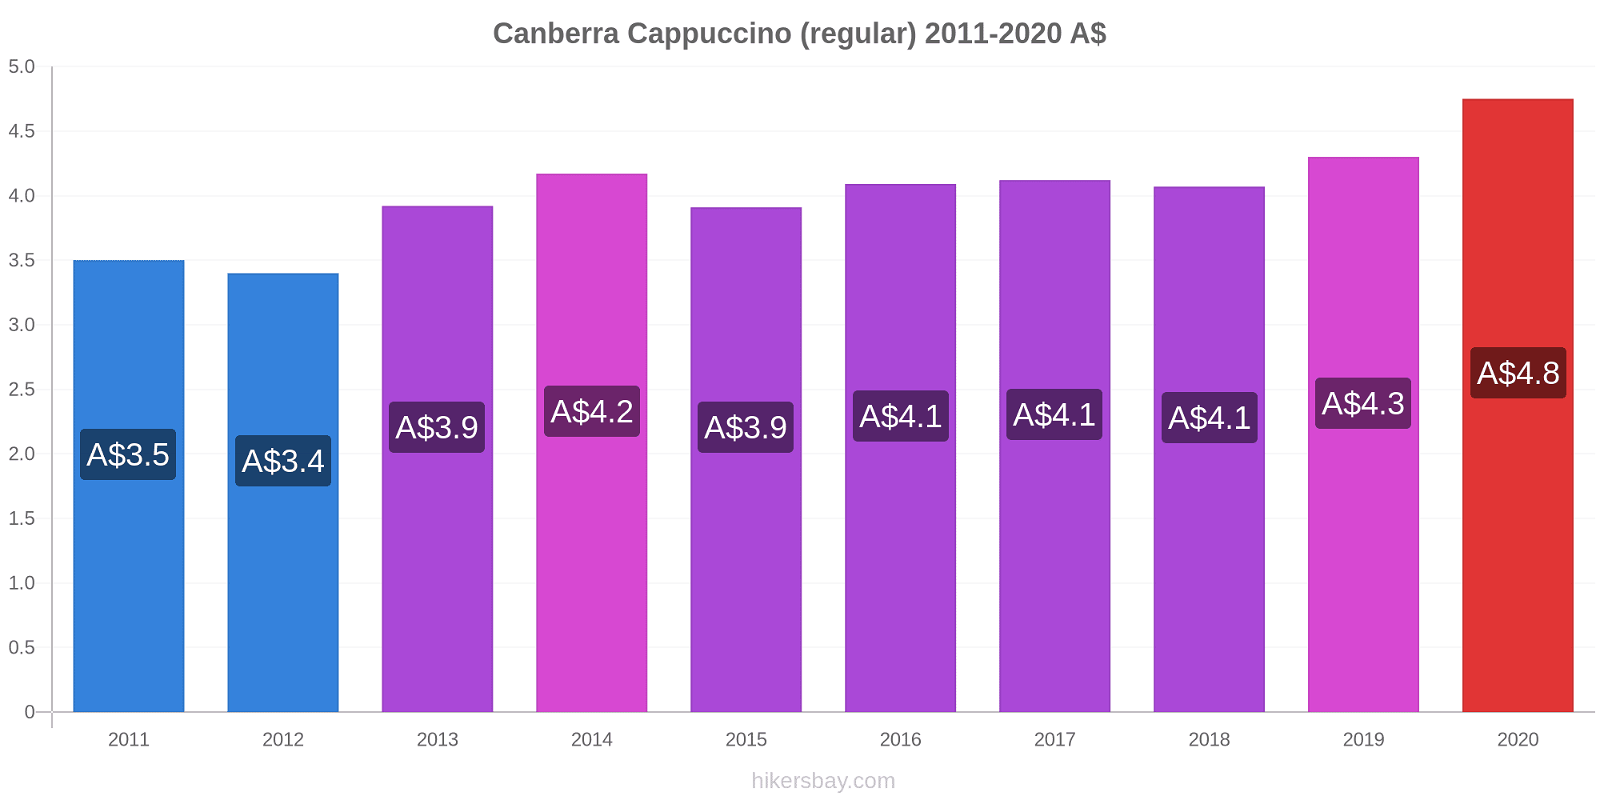 Canberra price changes Cappuccino (regular) hikersbay.com